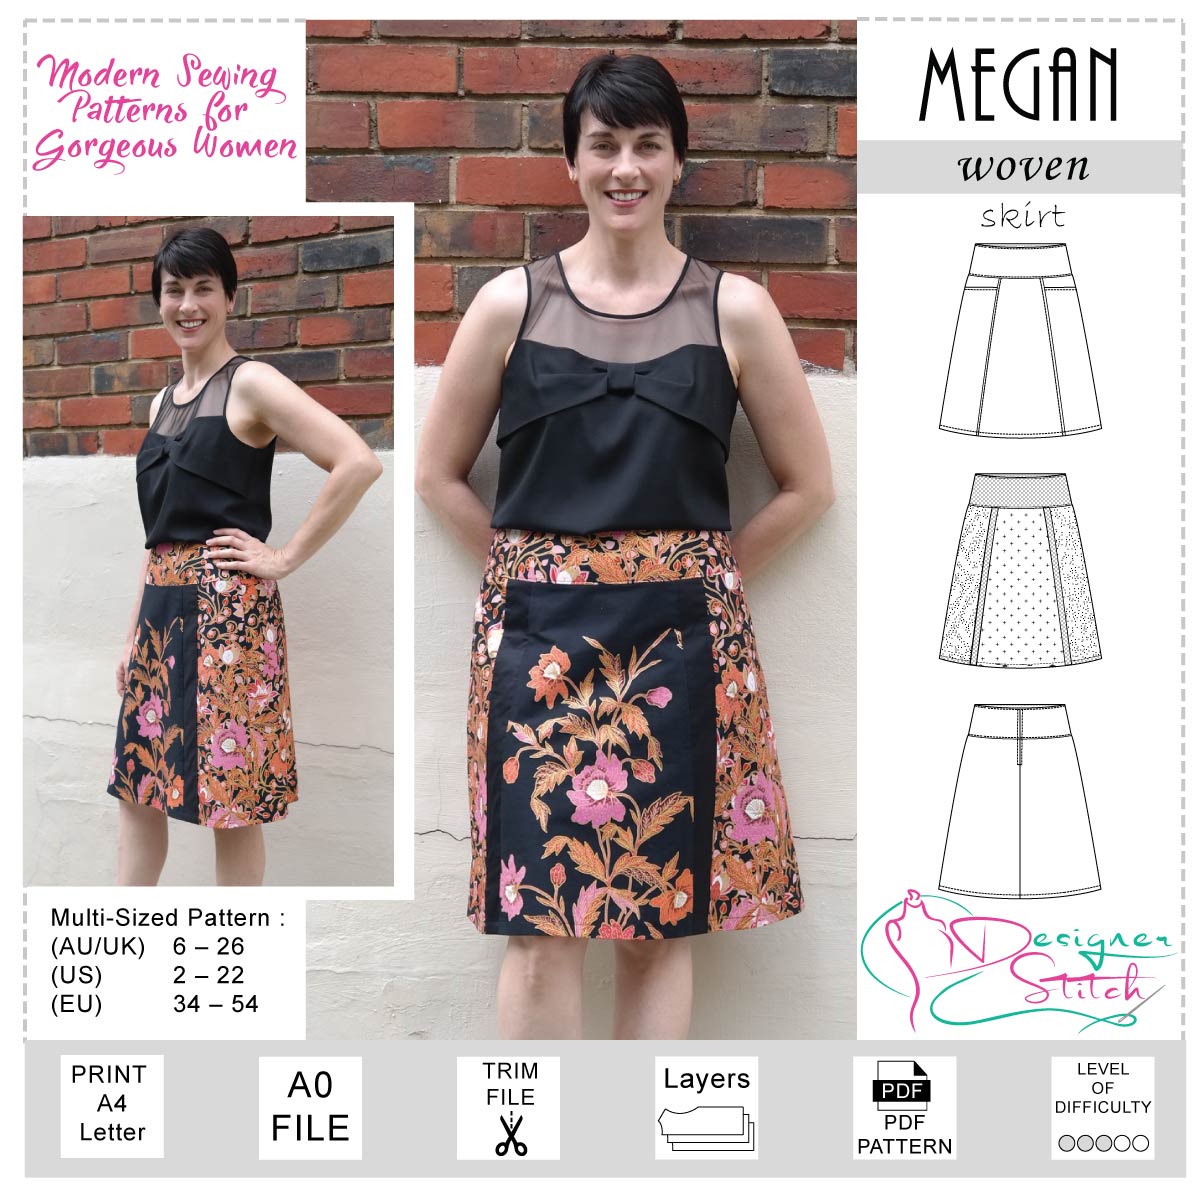 Megan Skirt Sewing Pattern (PDF) - Designer Stitch